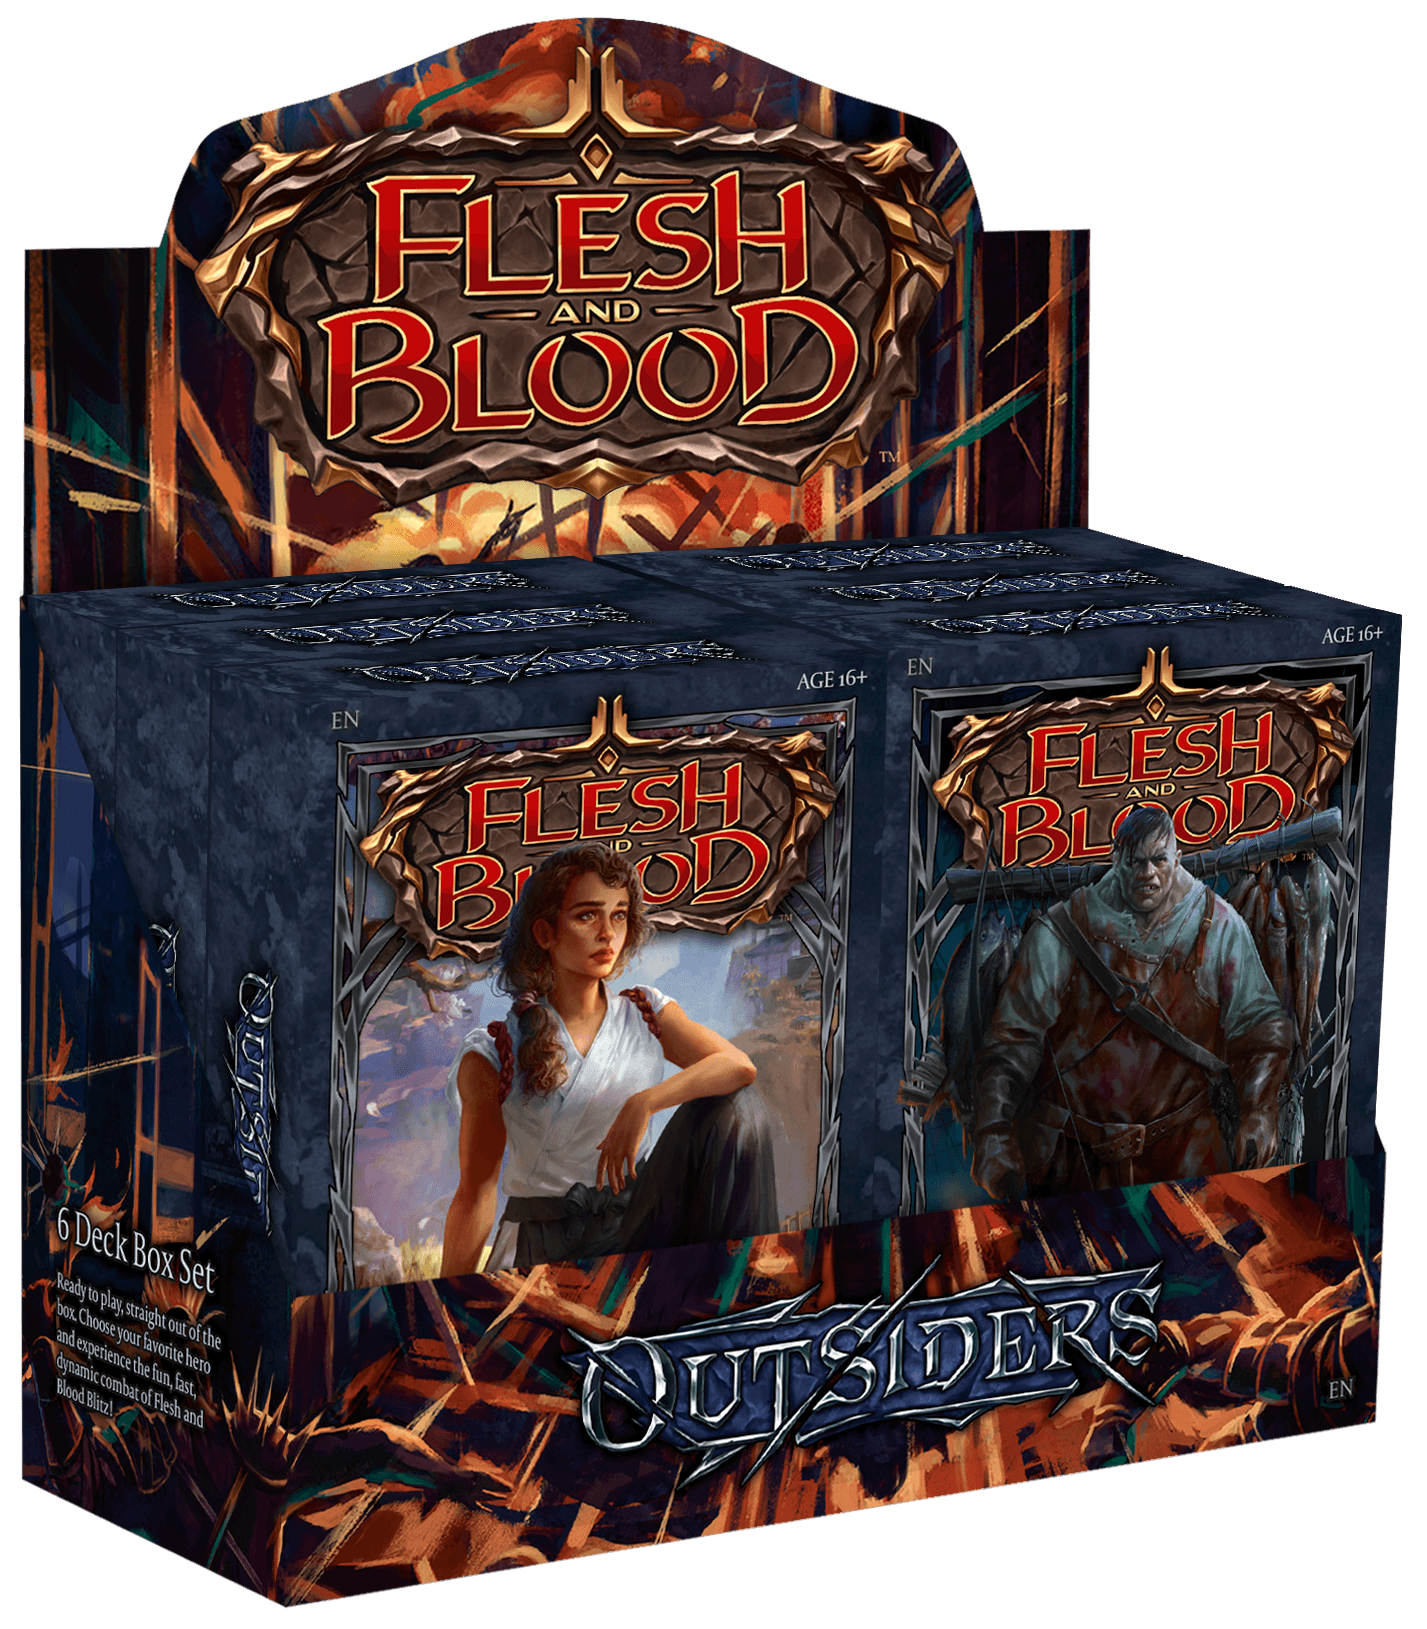 Flesh And Blood - Outsiders - Blitz Deck - Benji - Hobby Champion Inc